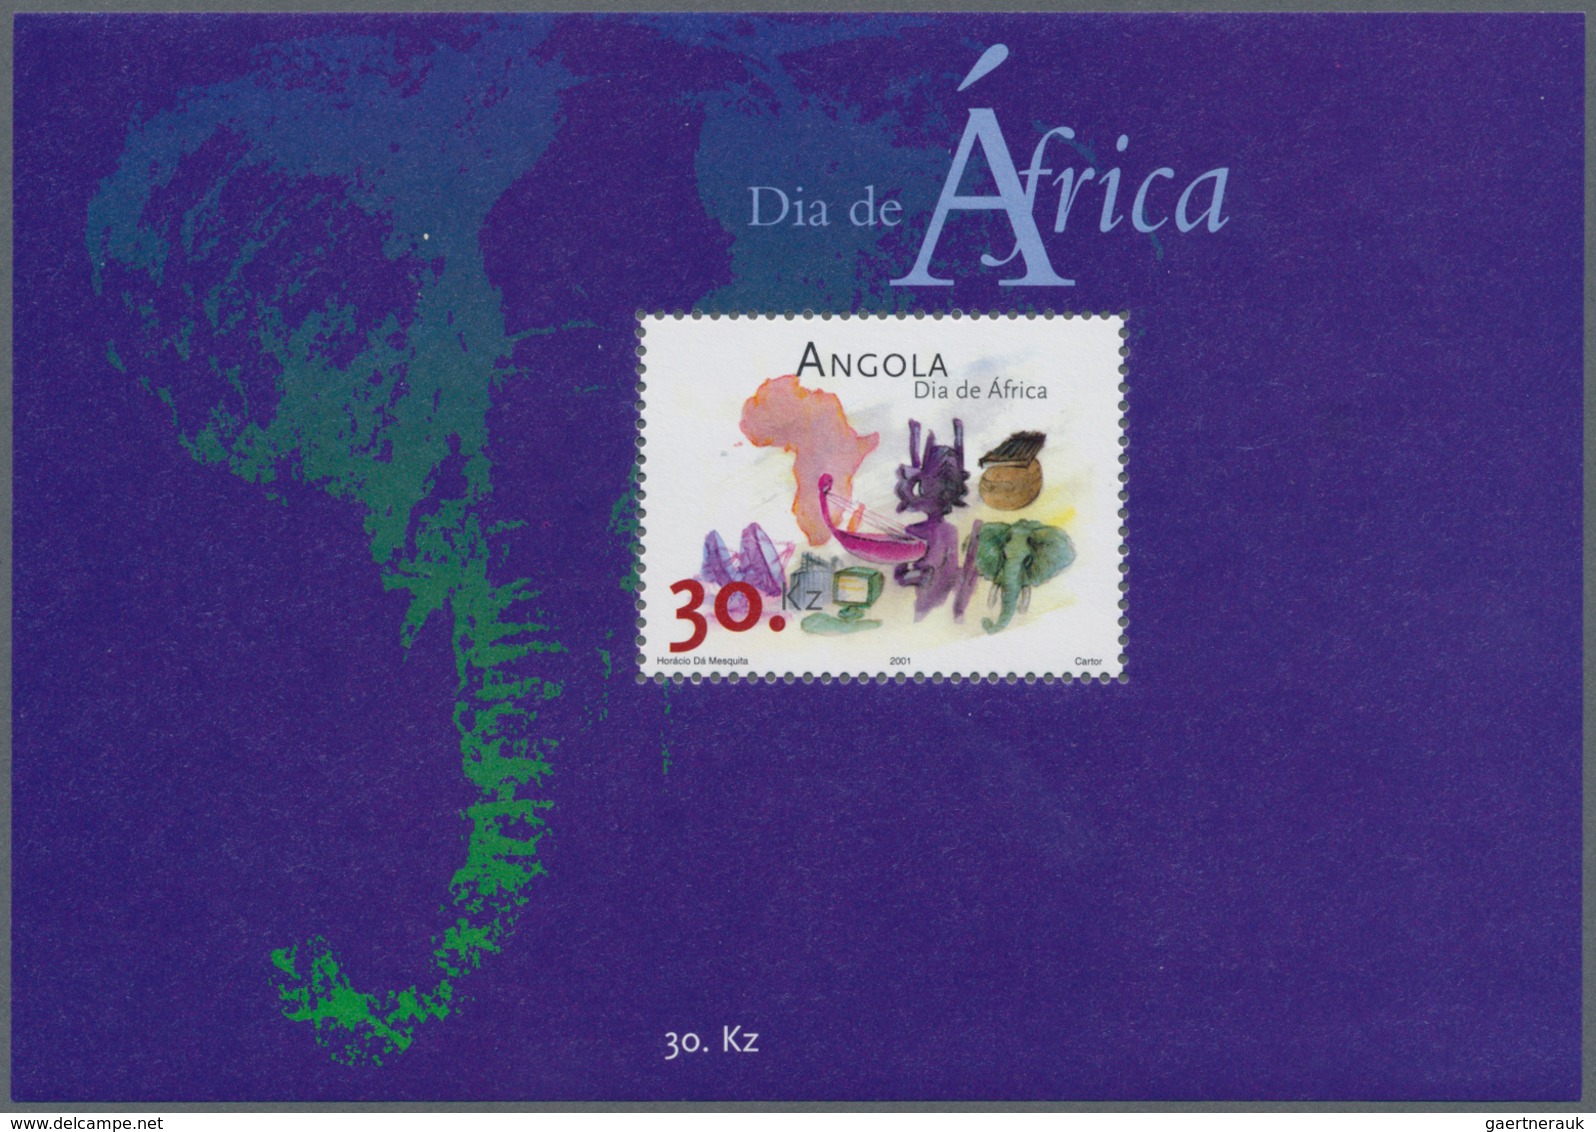 Angola: 2001, AFRICA DAY, Investment Lot Of 1000 Souvenir Sheets MNH (Mi.no. Bl. 93; Cat. Val. 6000, - Angola